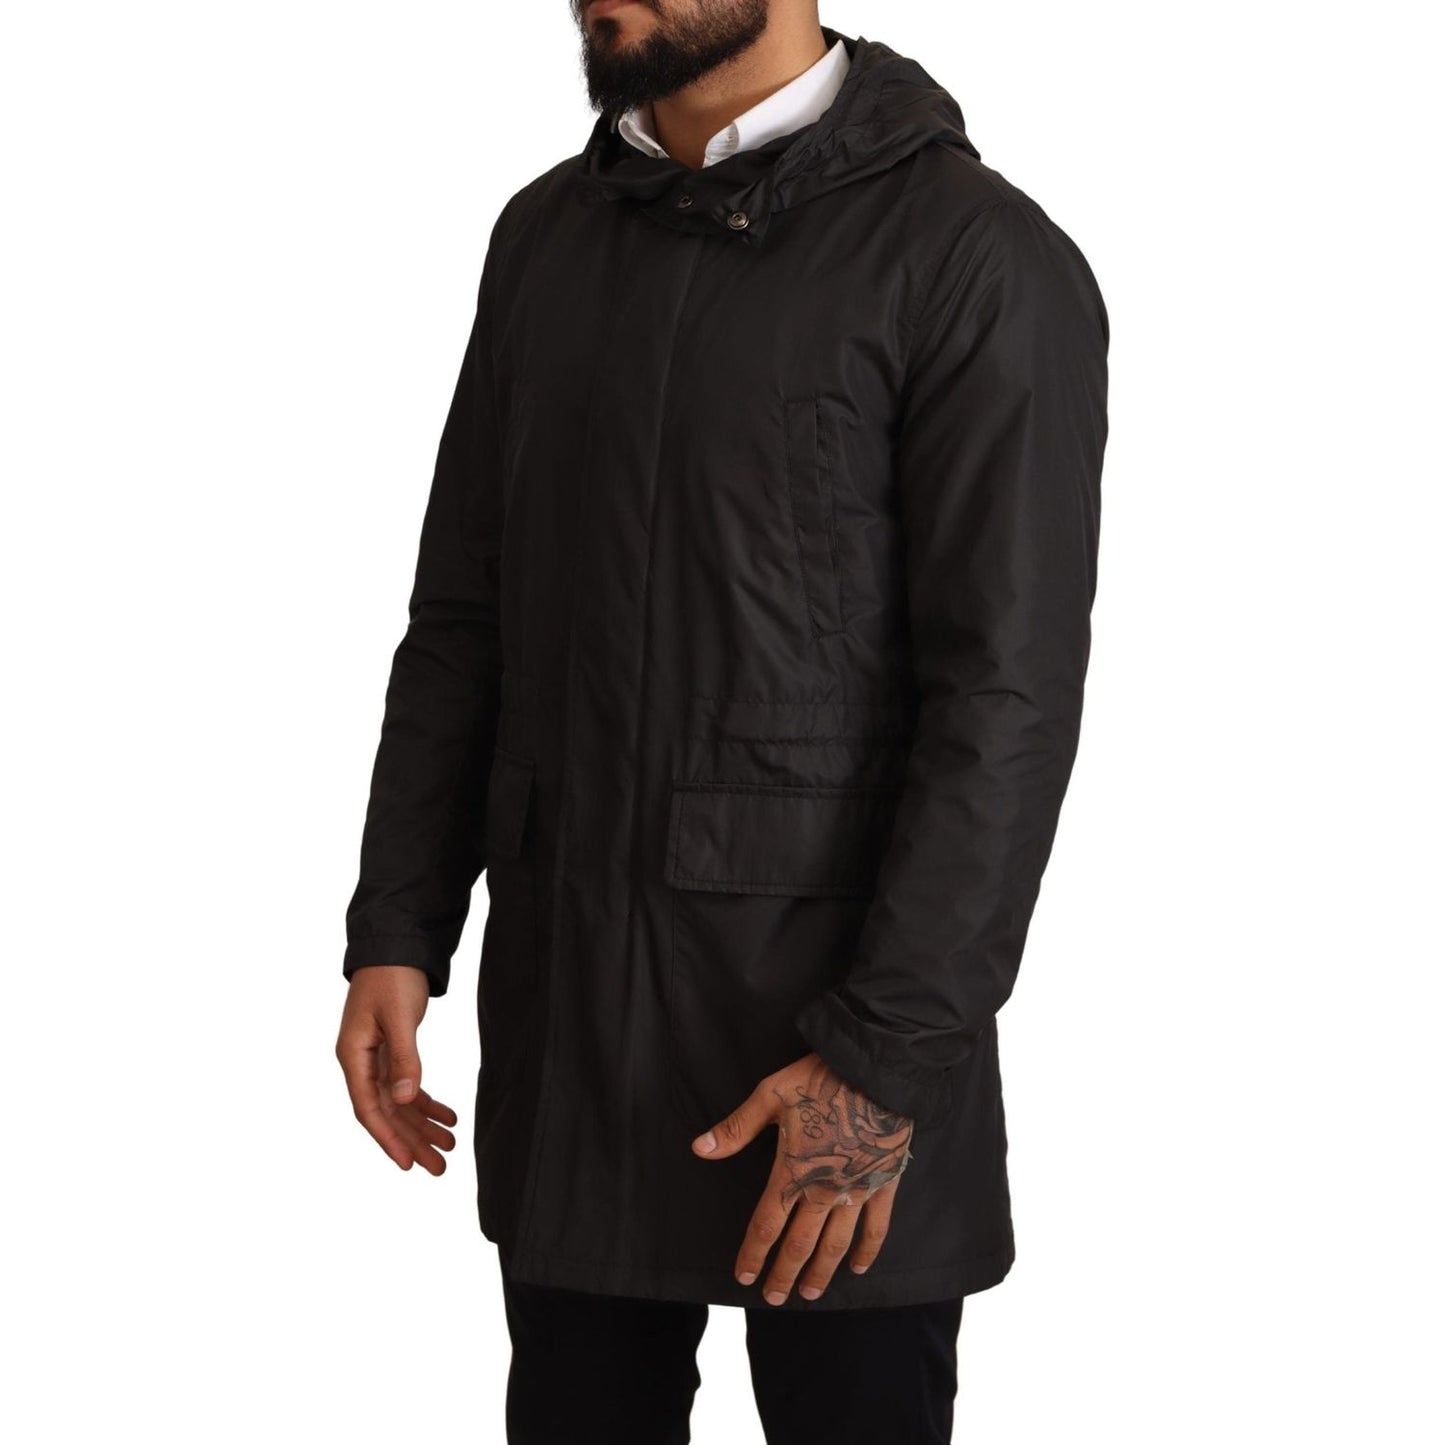 Dolce & Gabbana Chic Hooded Blouson Coat in Timeless Black MAN COATS & JACKETS black-hooded-trench-coat-jacket